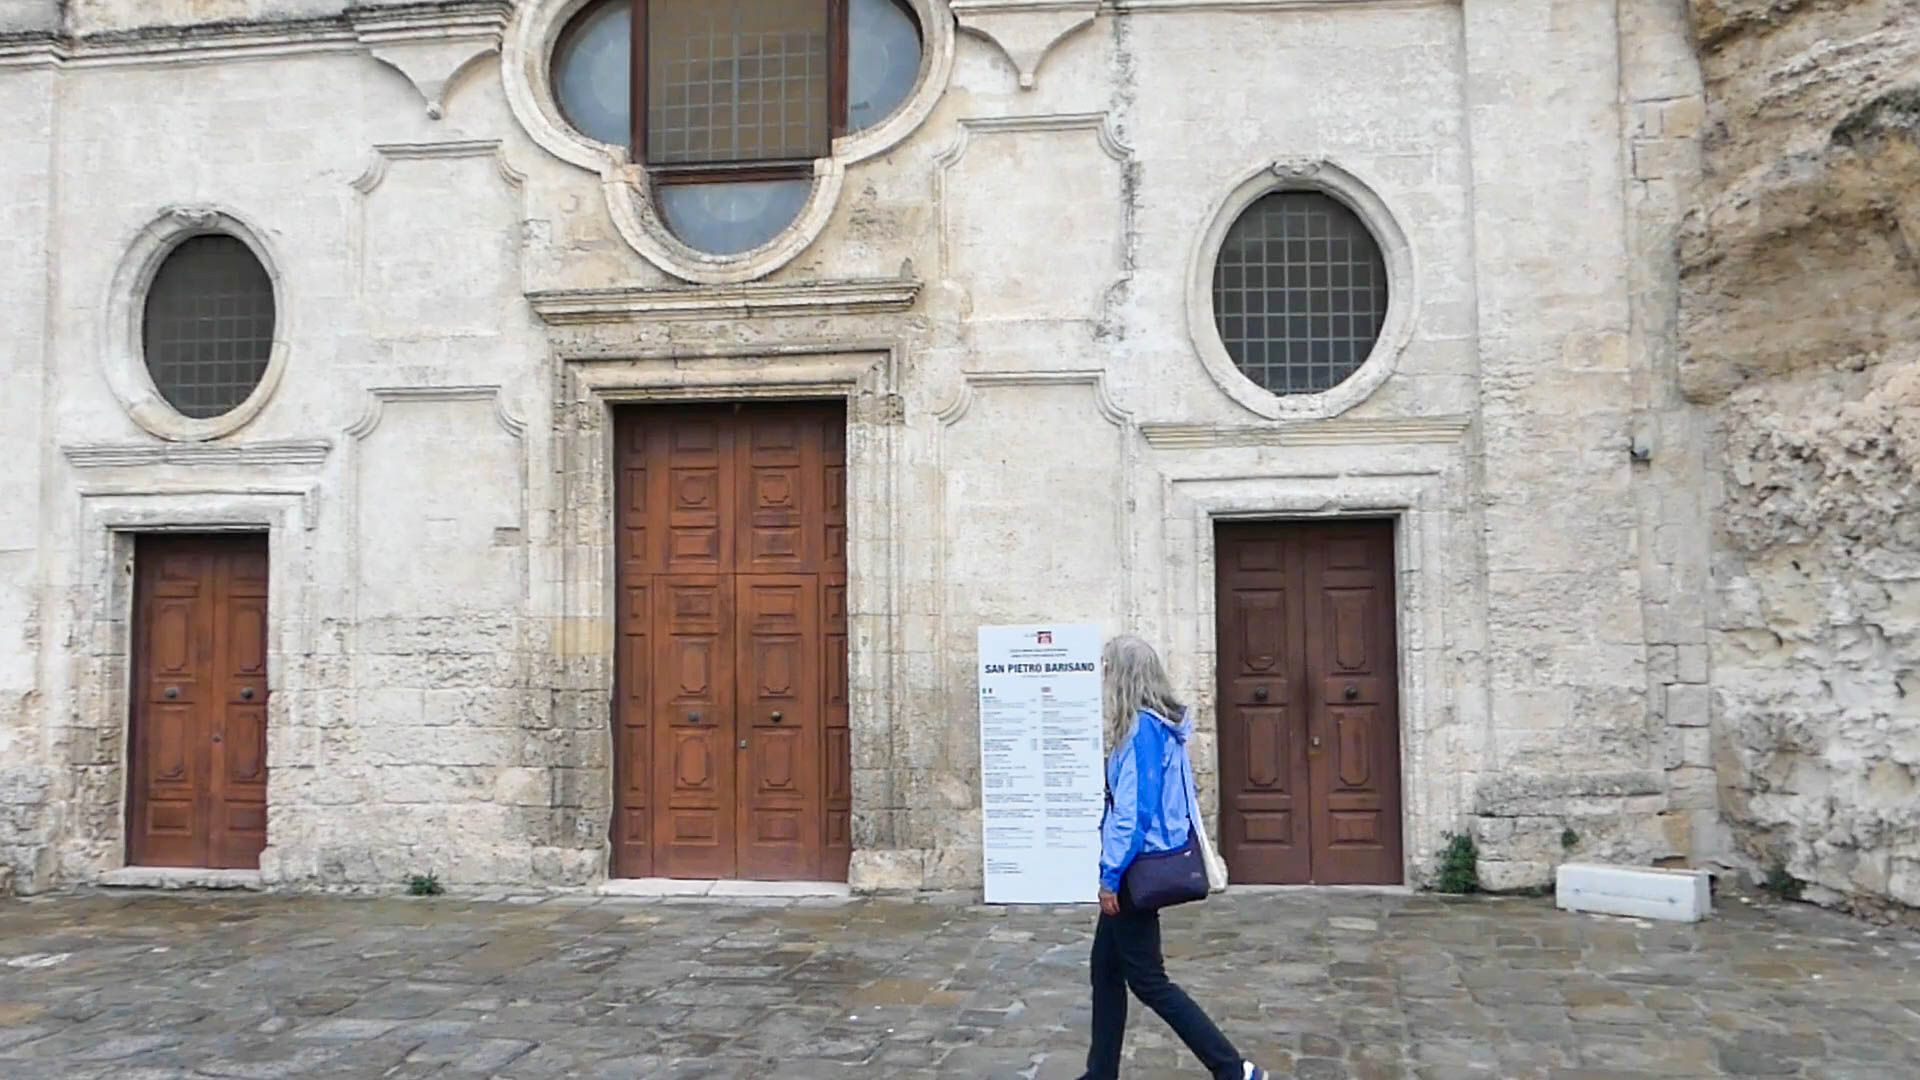 Gina läuft vor der Fassade der Kirche entlang.